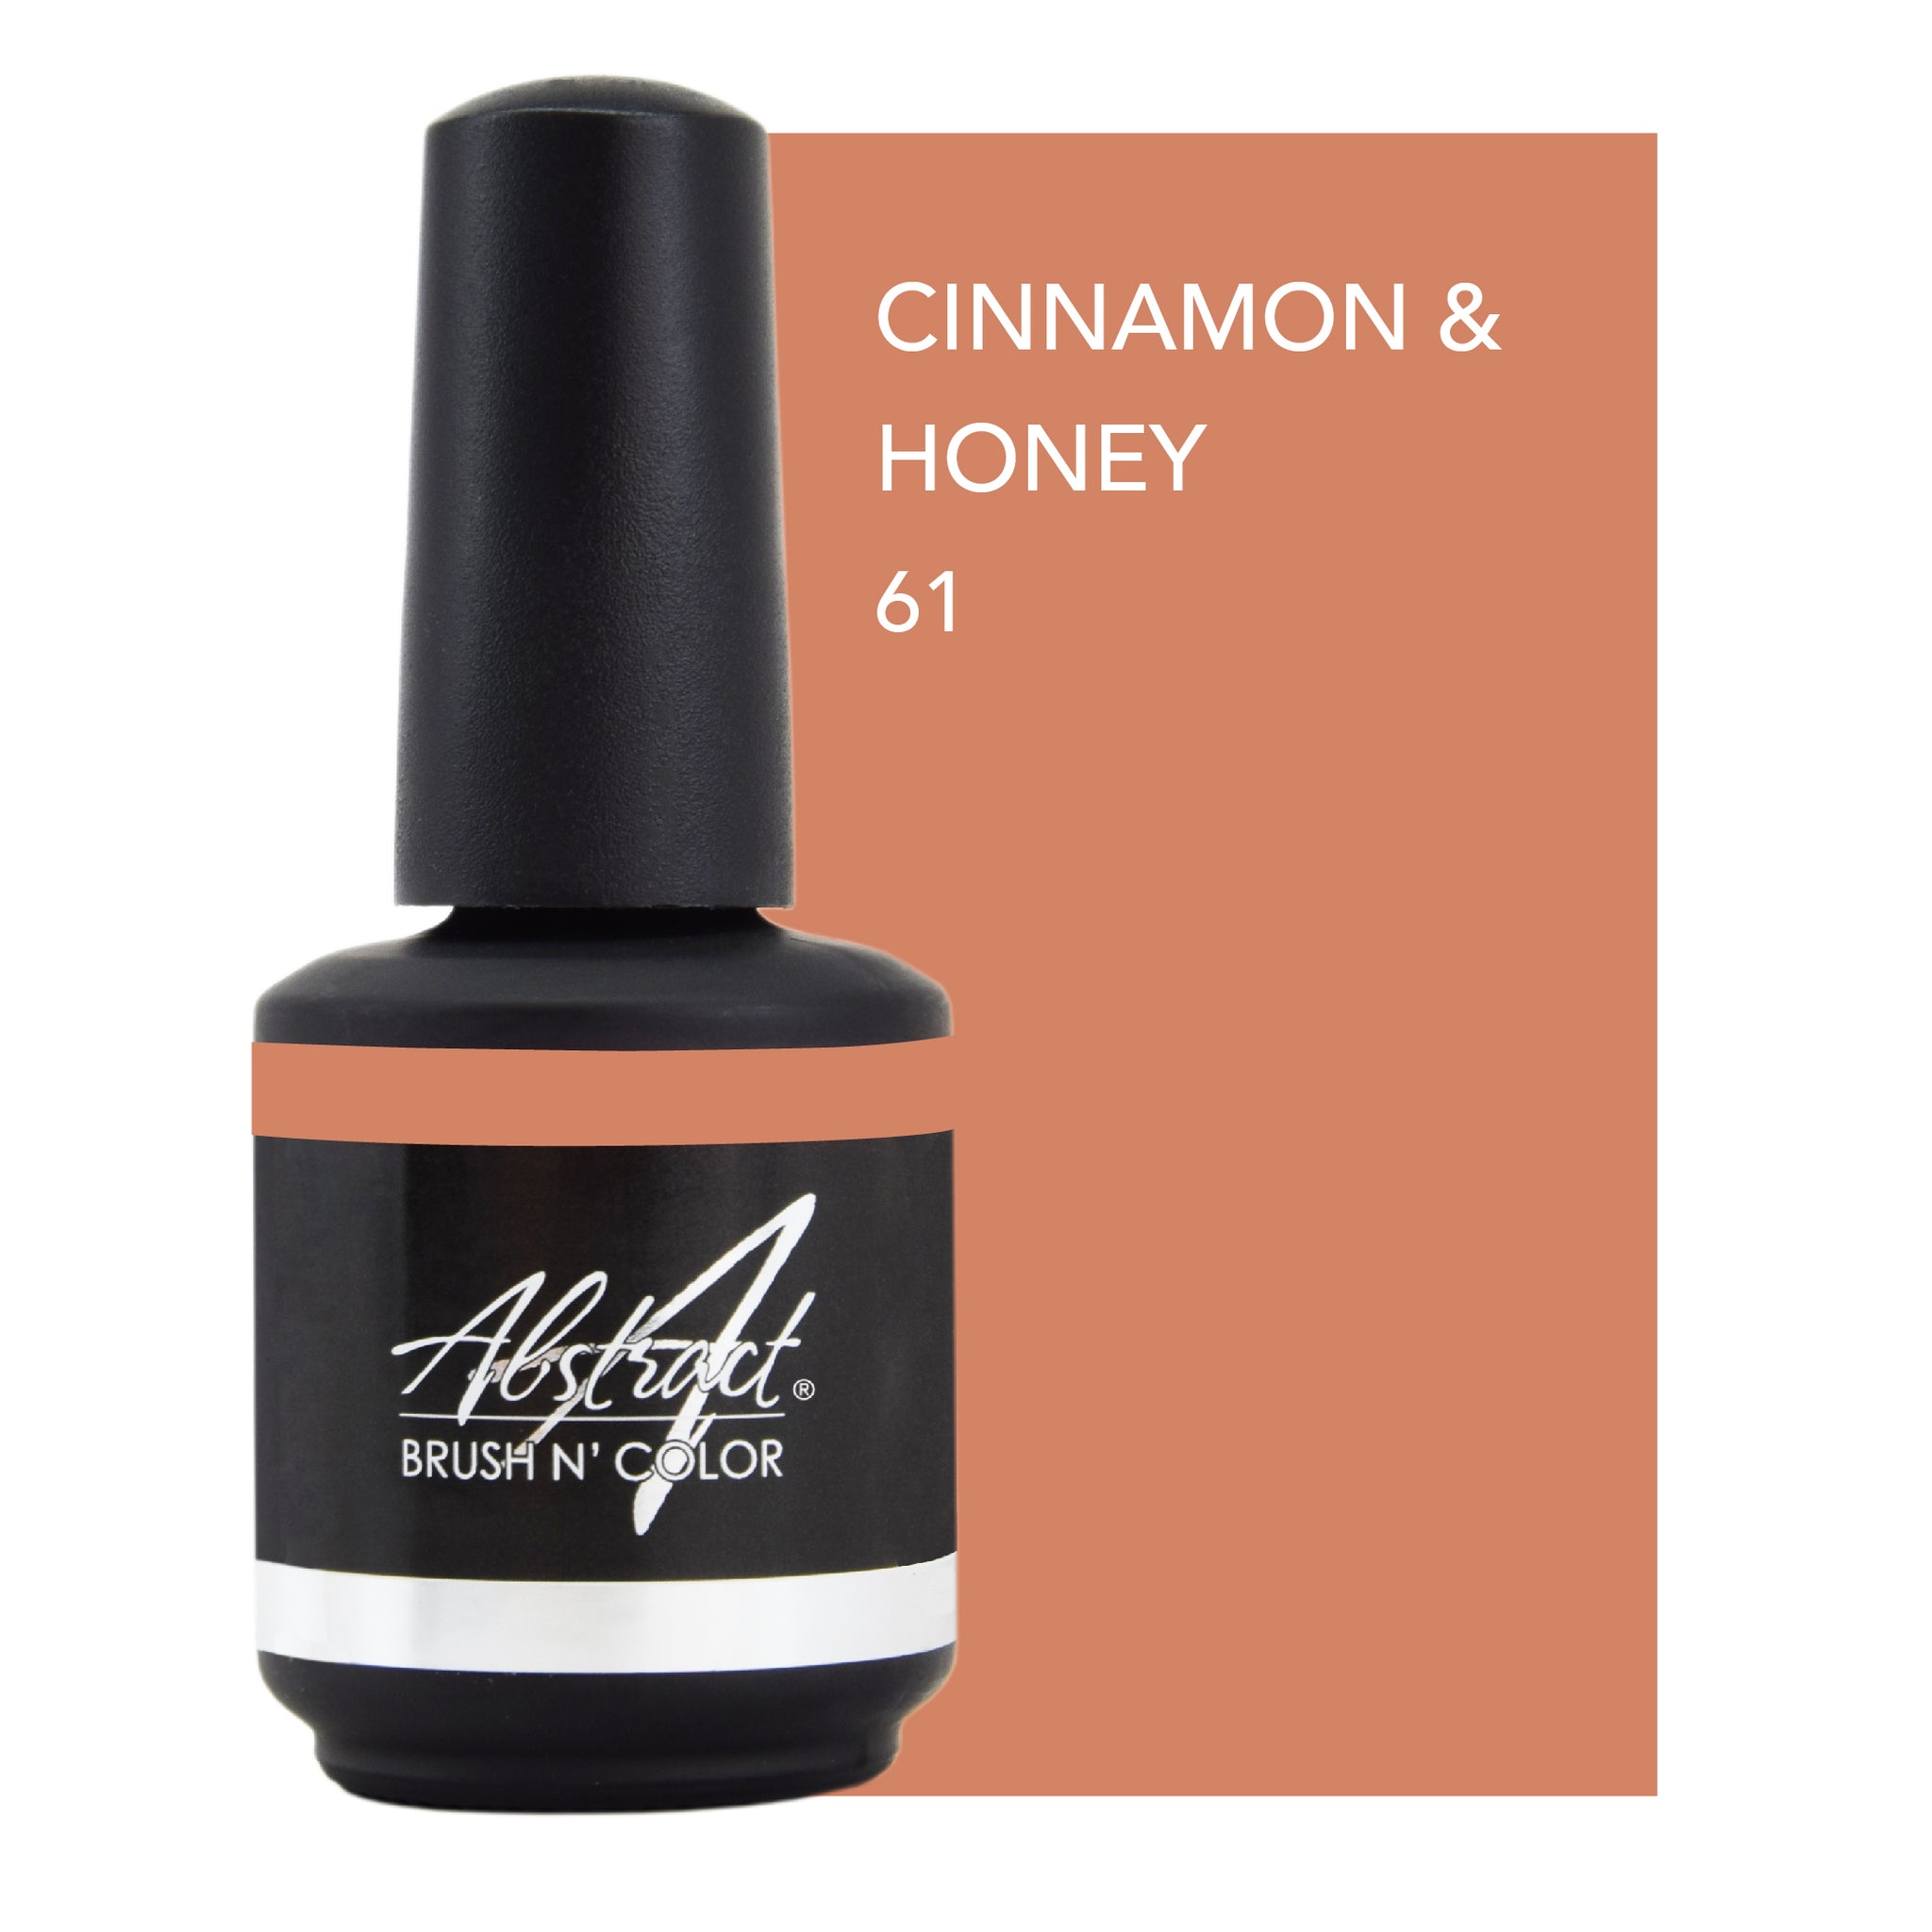 Cinnamon & Honey